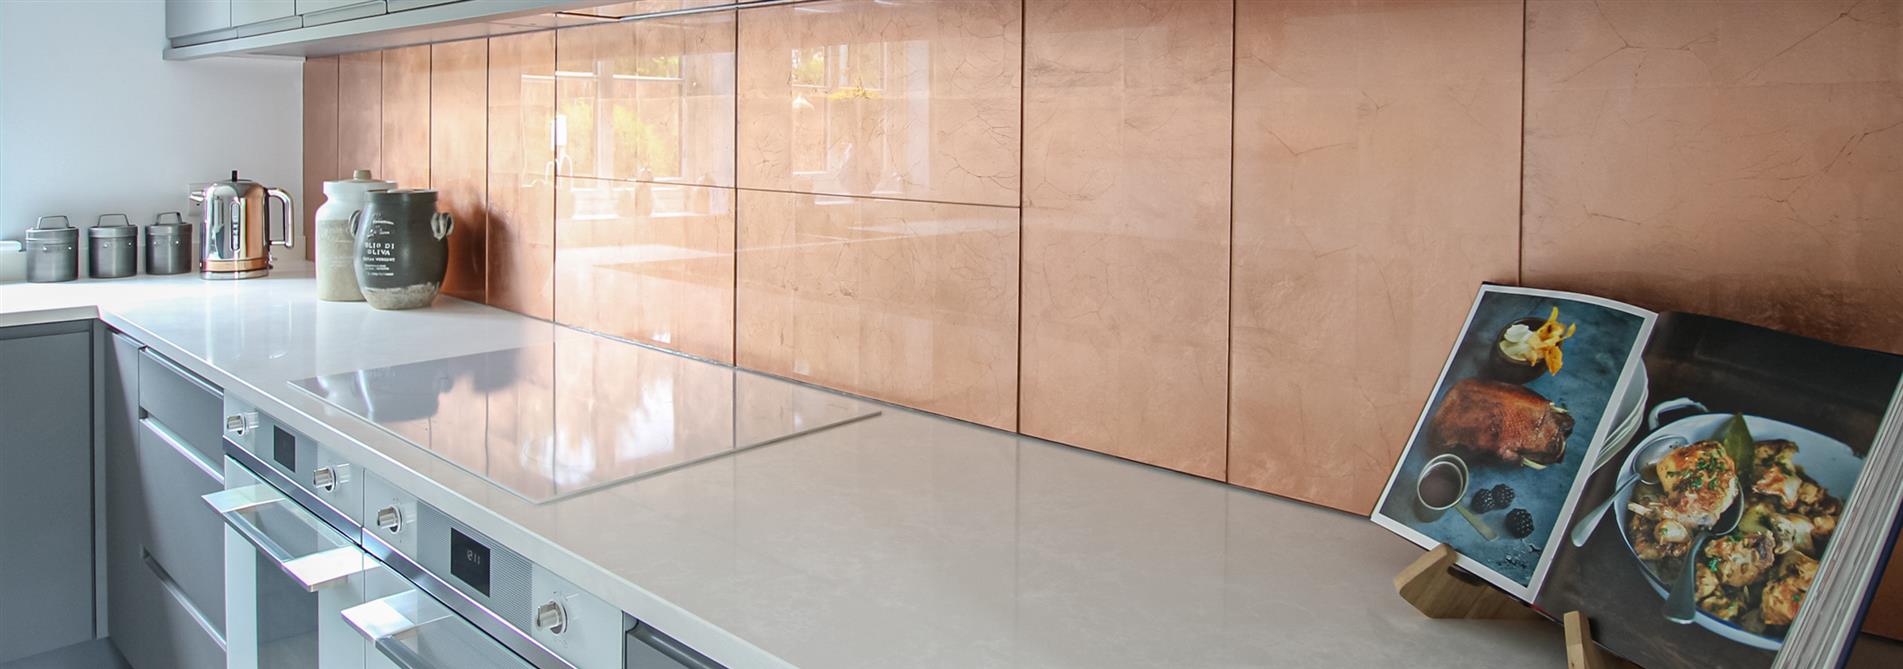 copper tiles modern kitchen